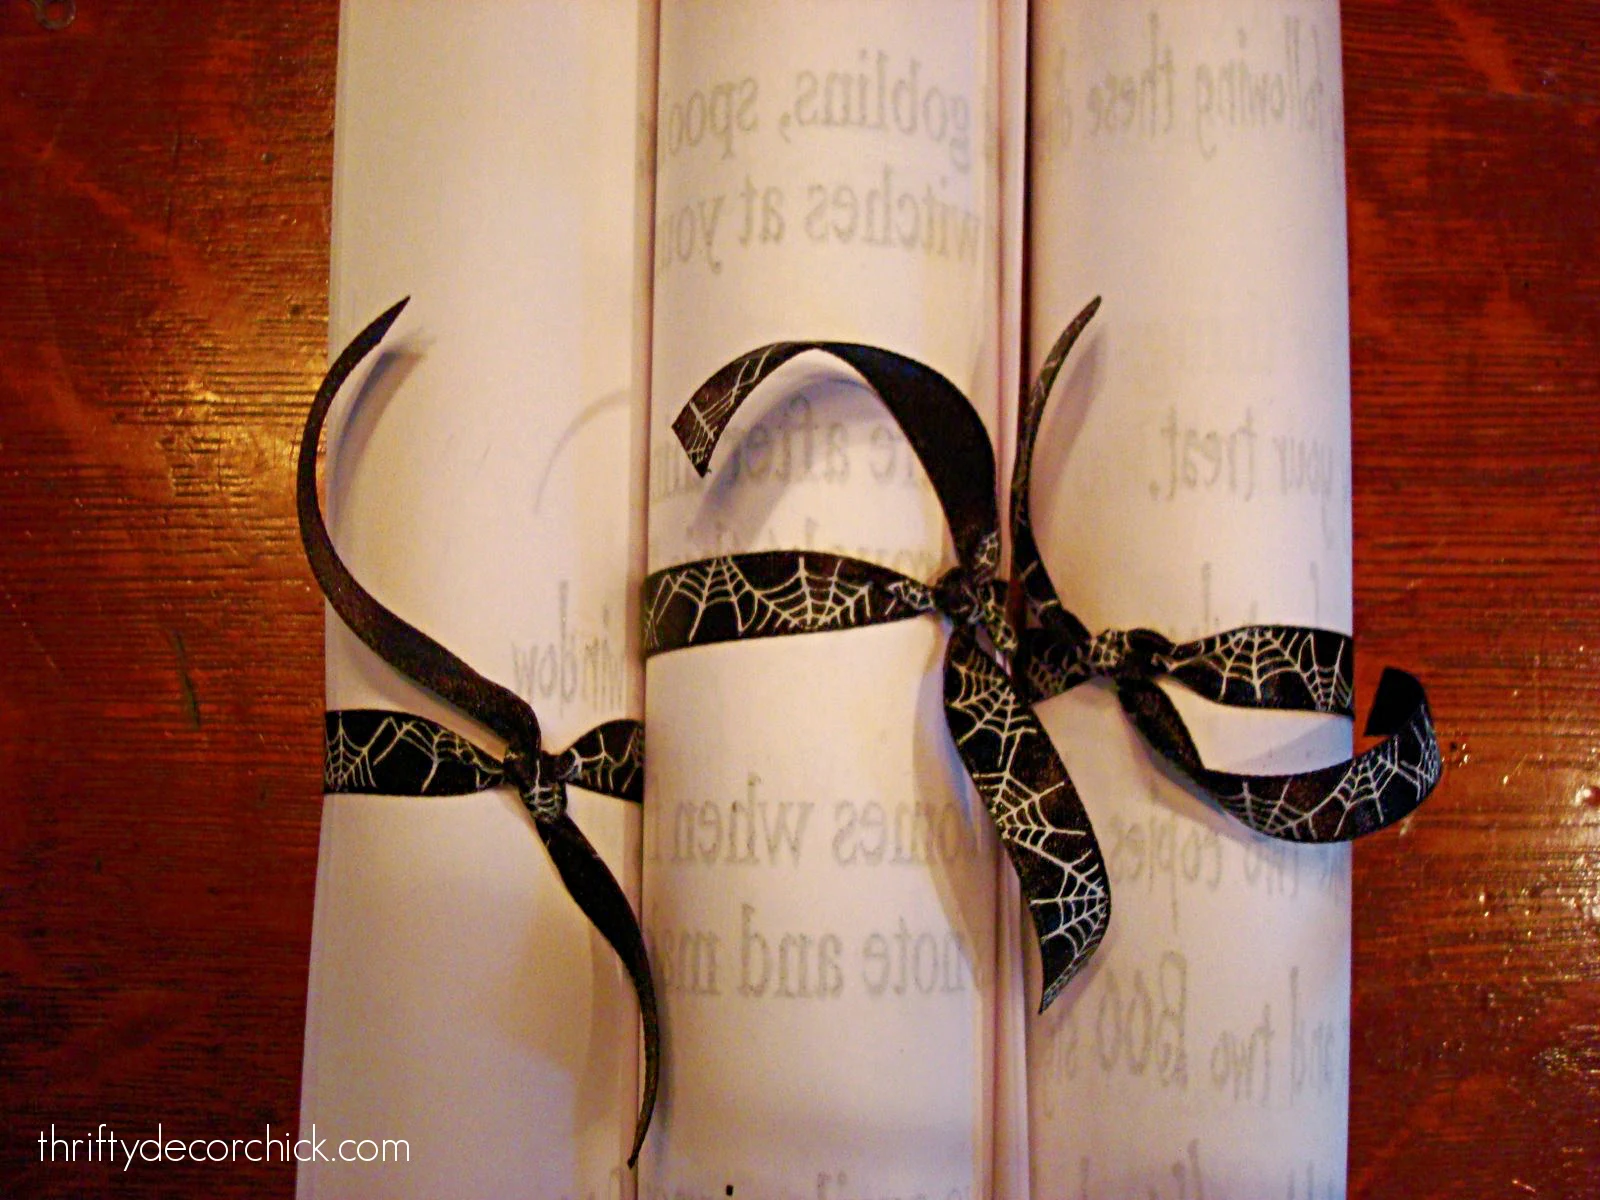 boo scrolls with ribbon